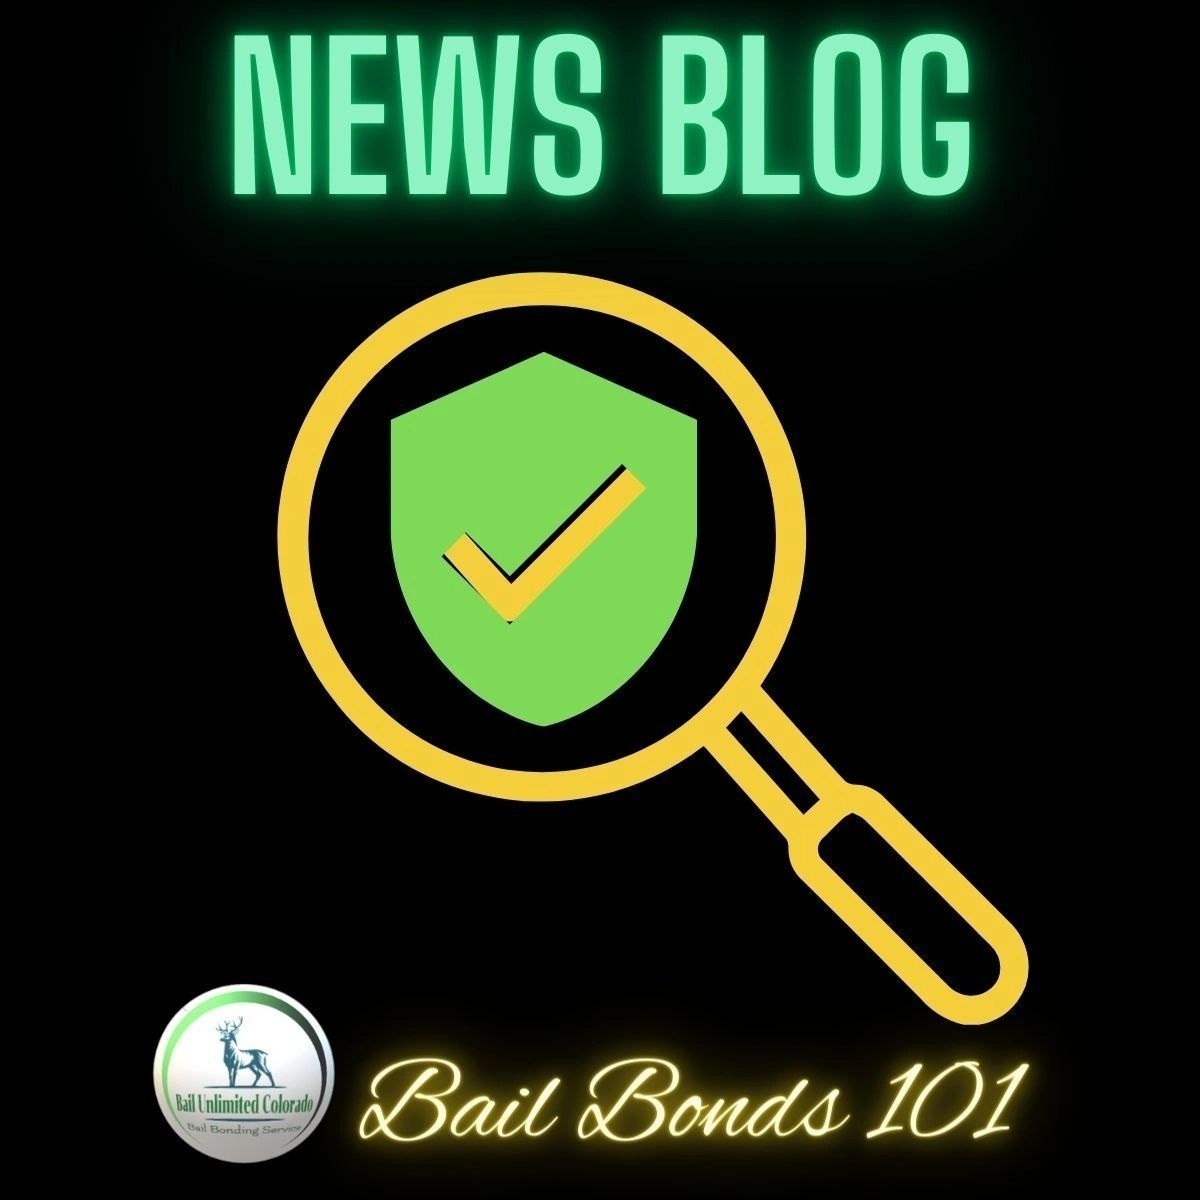 News Blog Bail Bonds 101 a Bail Unlimited Colorado Google news publication. Topical Authority Writer